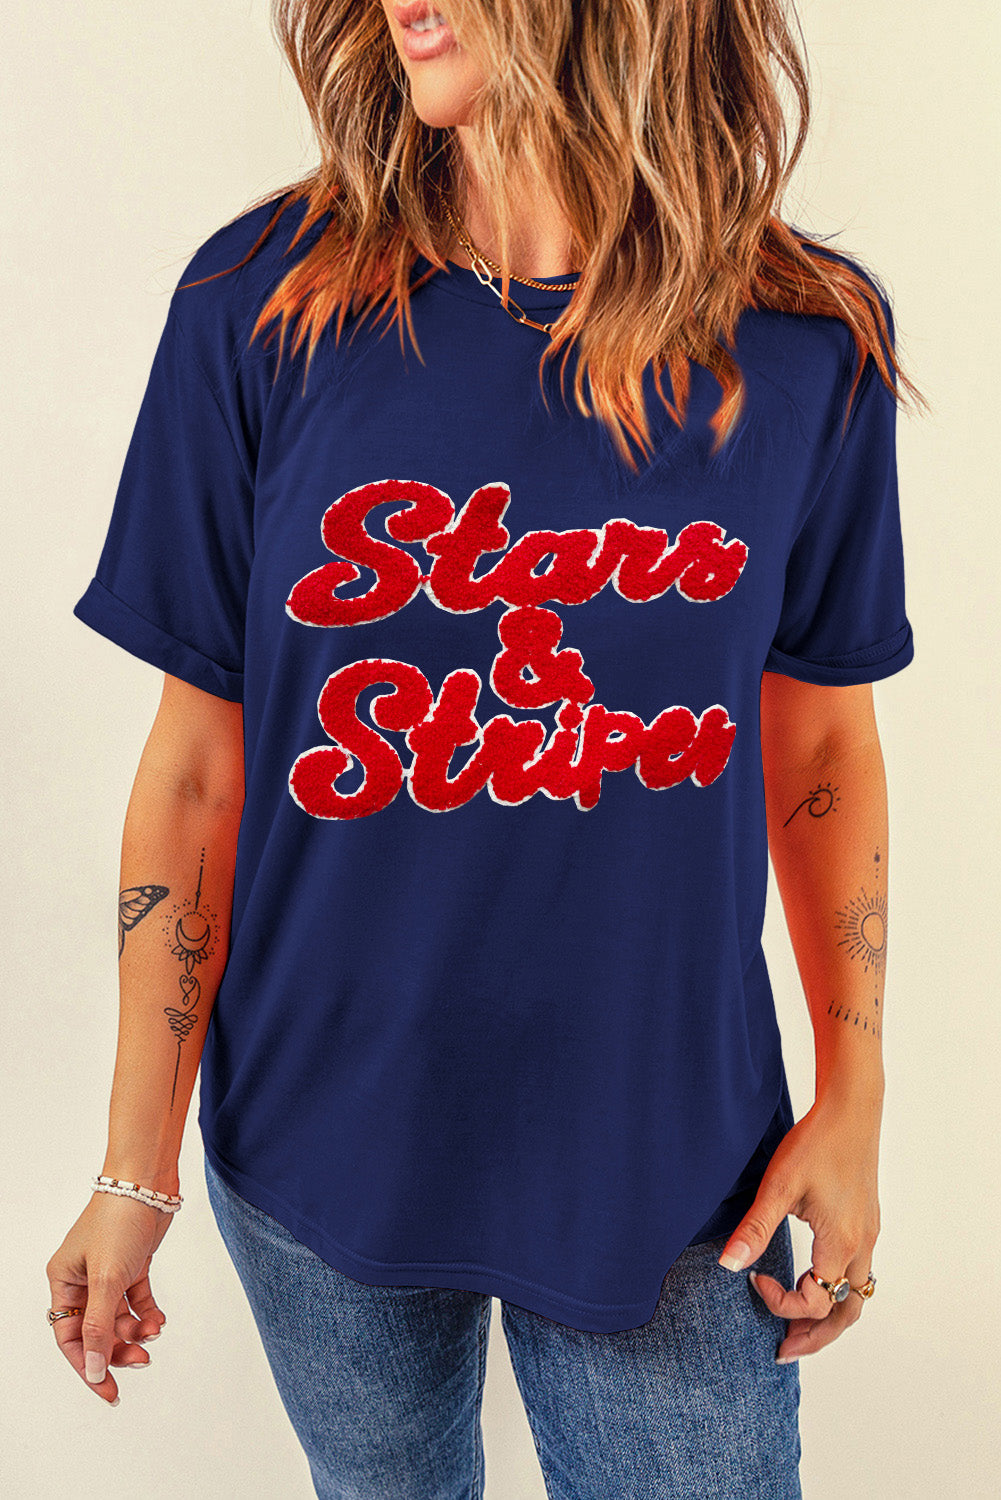 Stars & Stripes Women's Short Sleeve Graphic T-Shirt - Sydney So Sweet